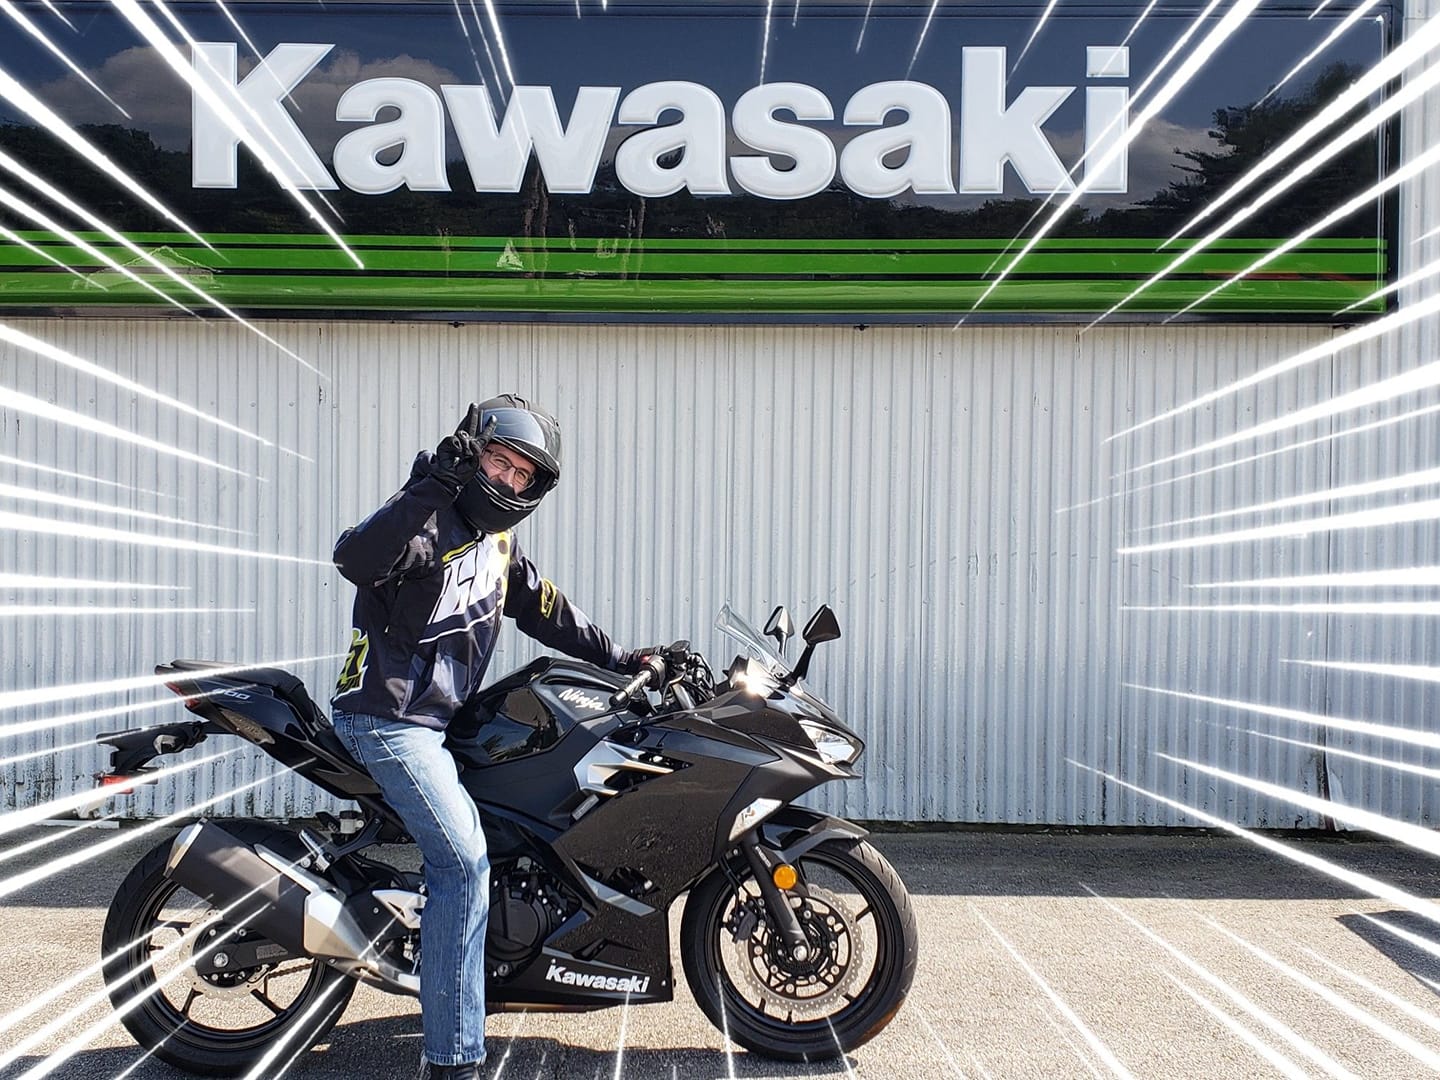 JEM Motorsports Kawasaki